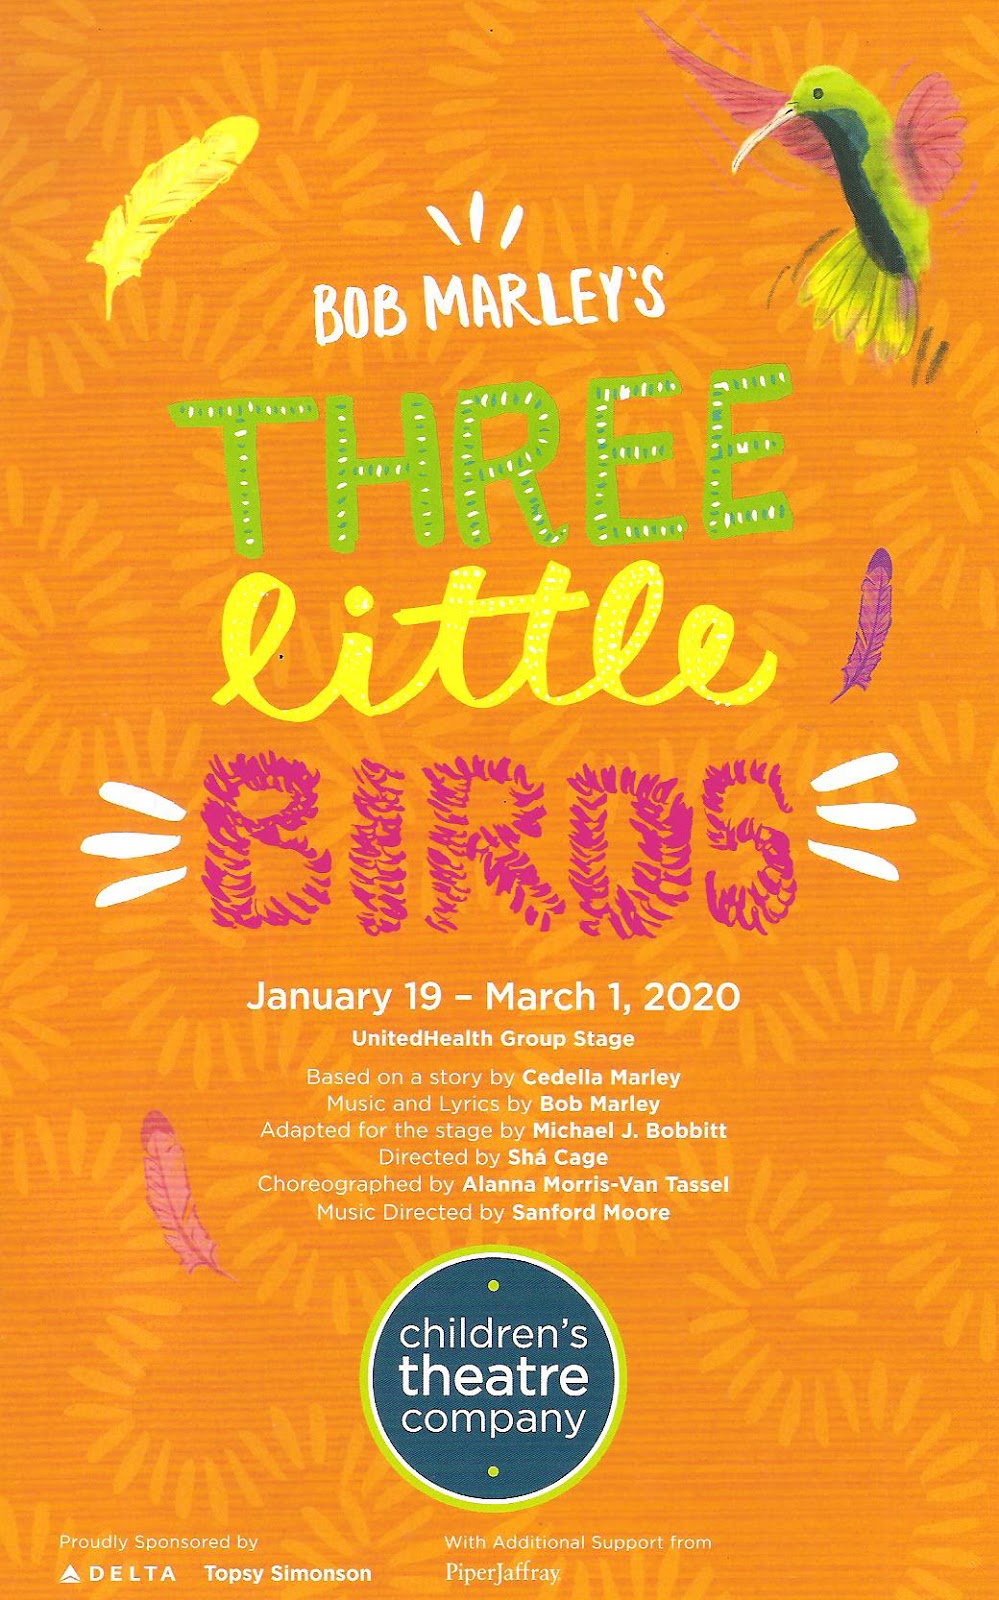 Bob Marley- Three Little Birds (With Lyrics!) 